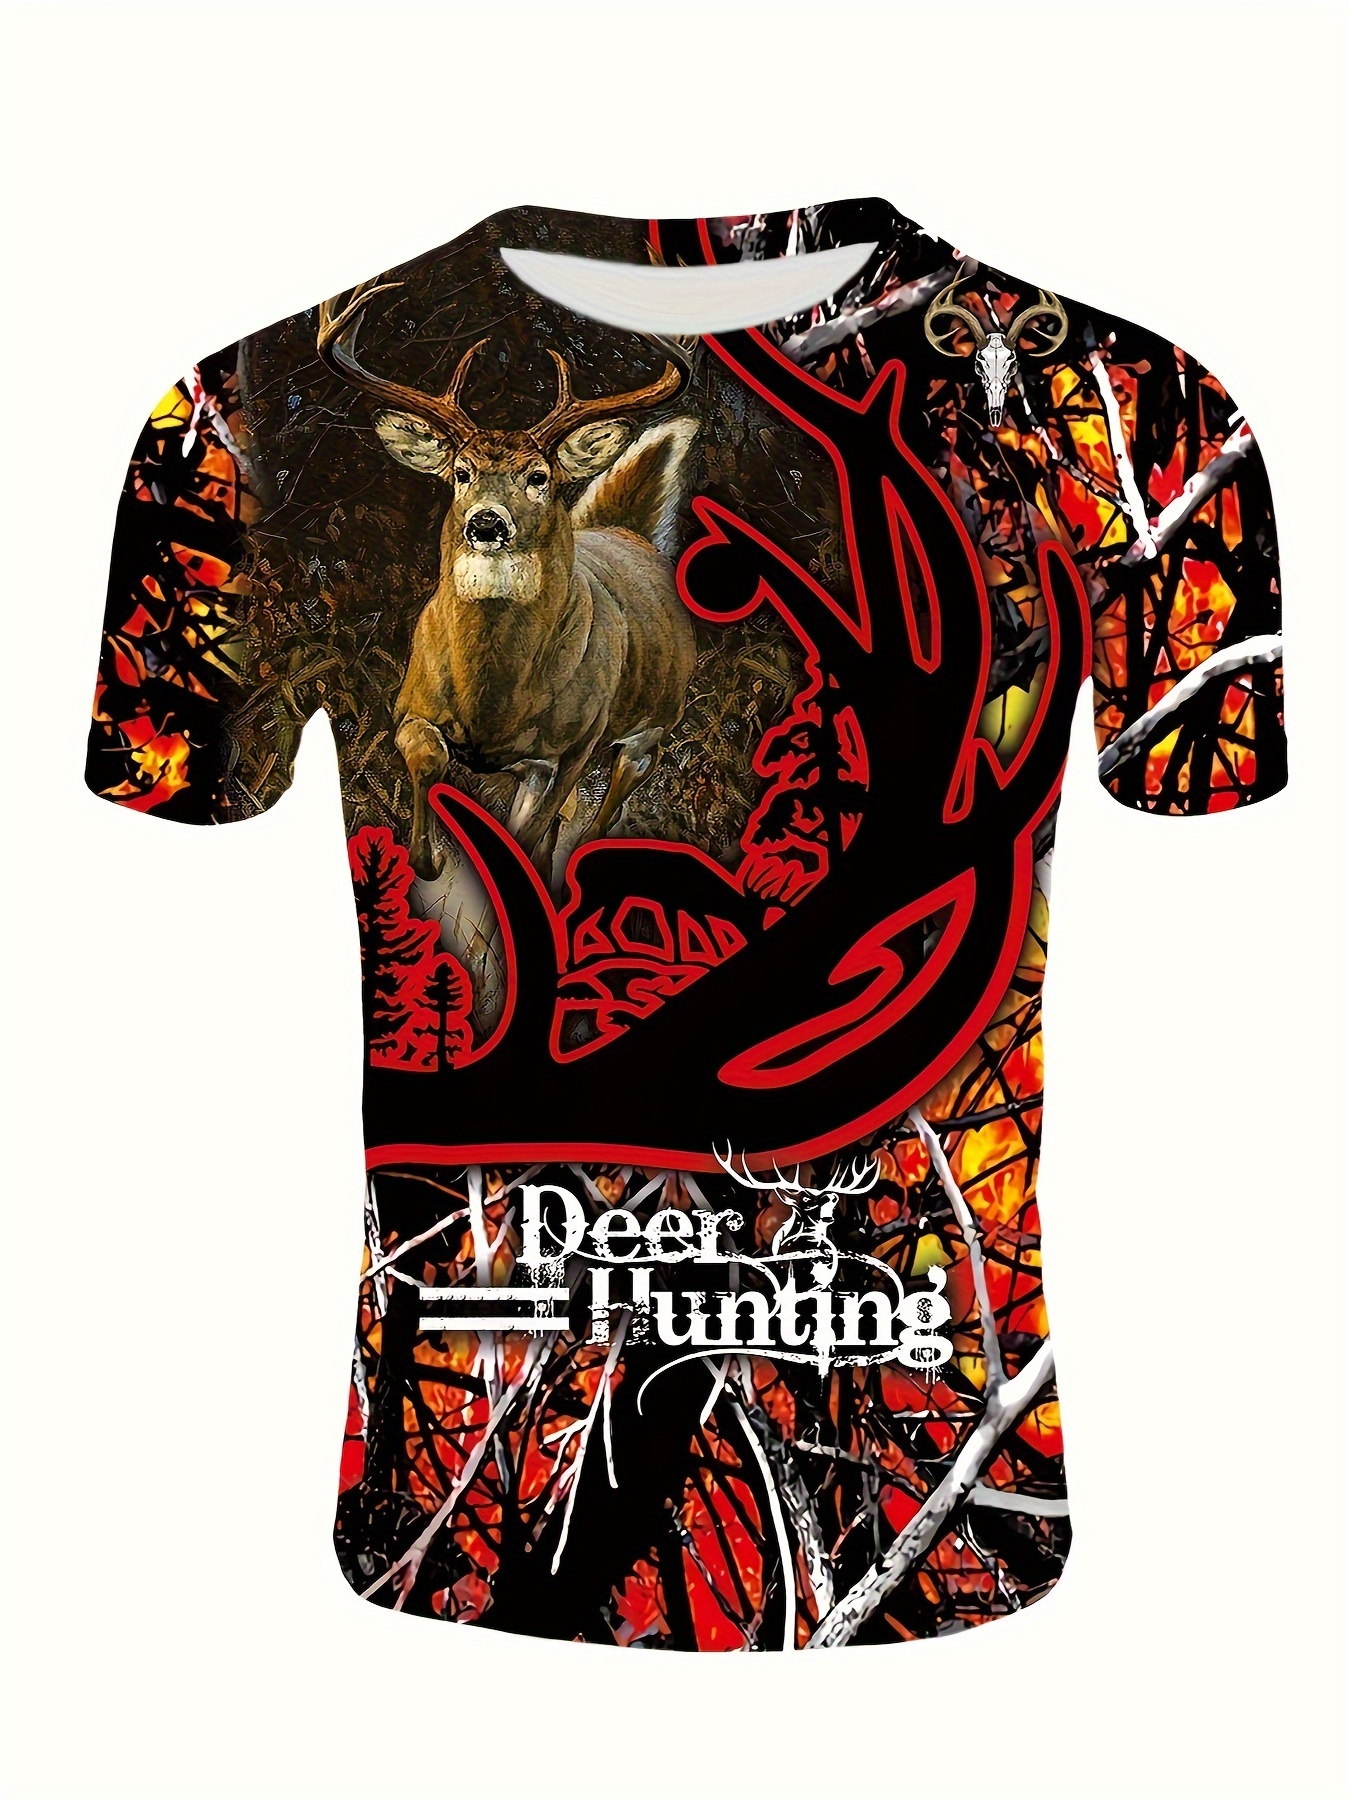 Hunting Shirt - Temu